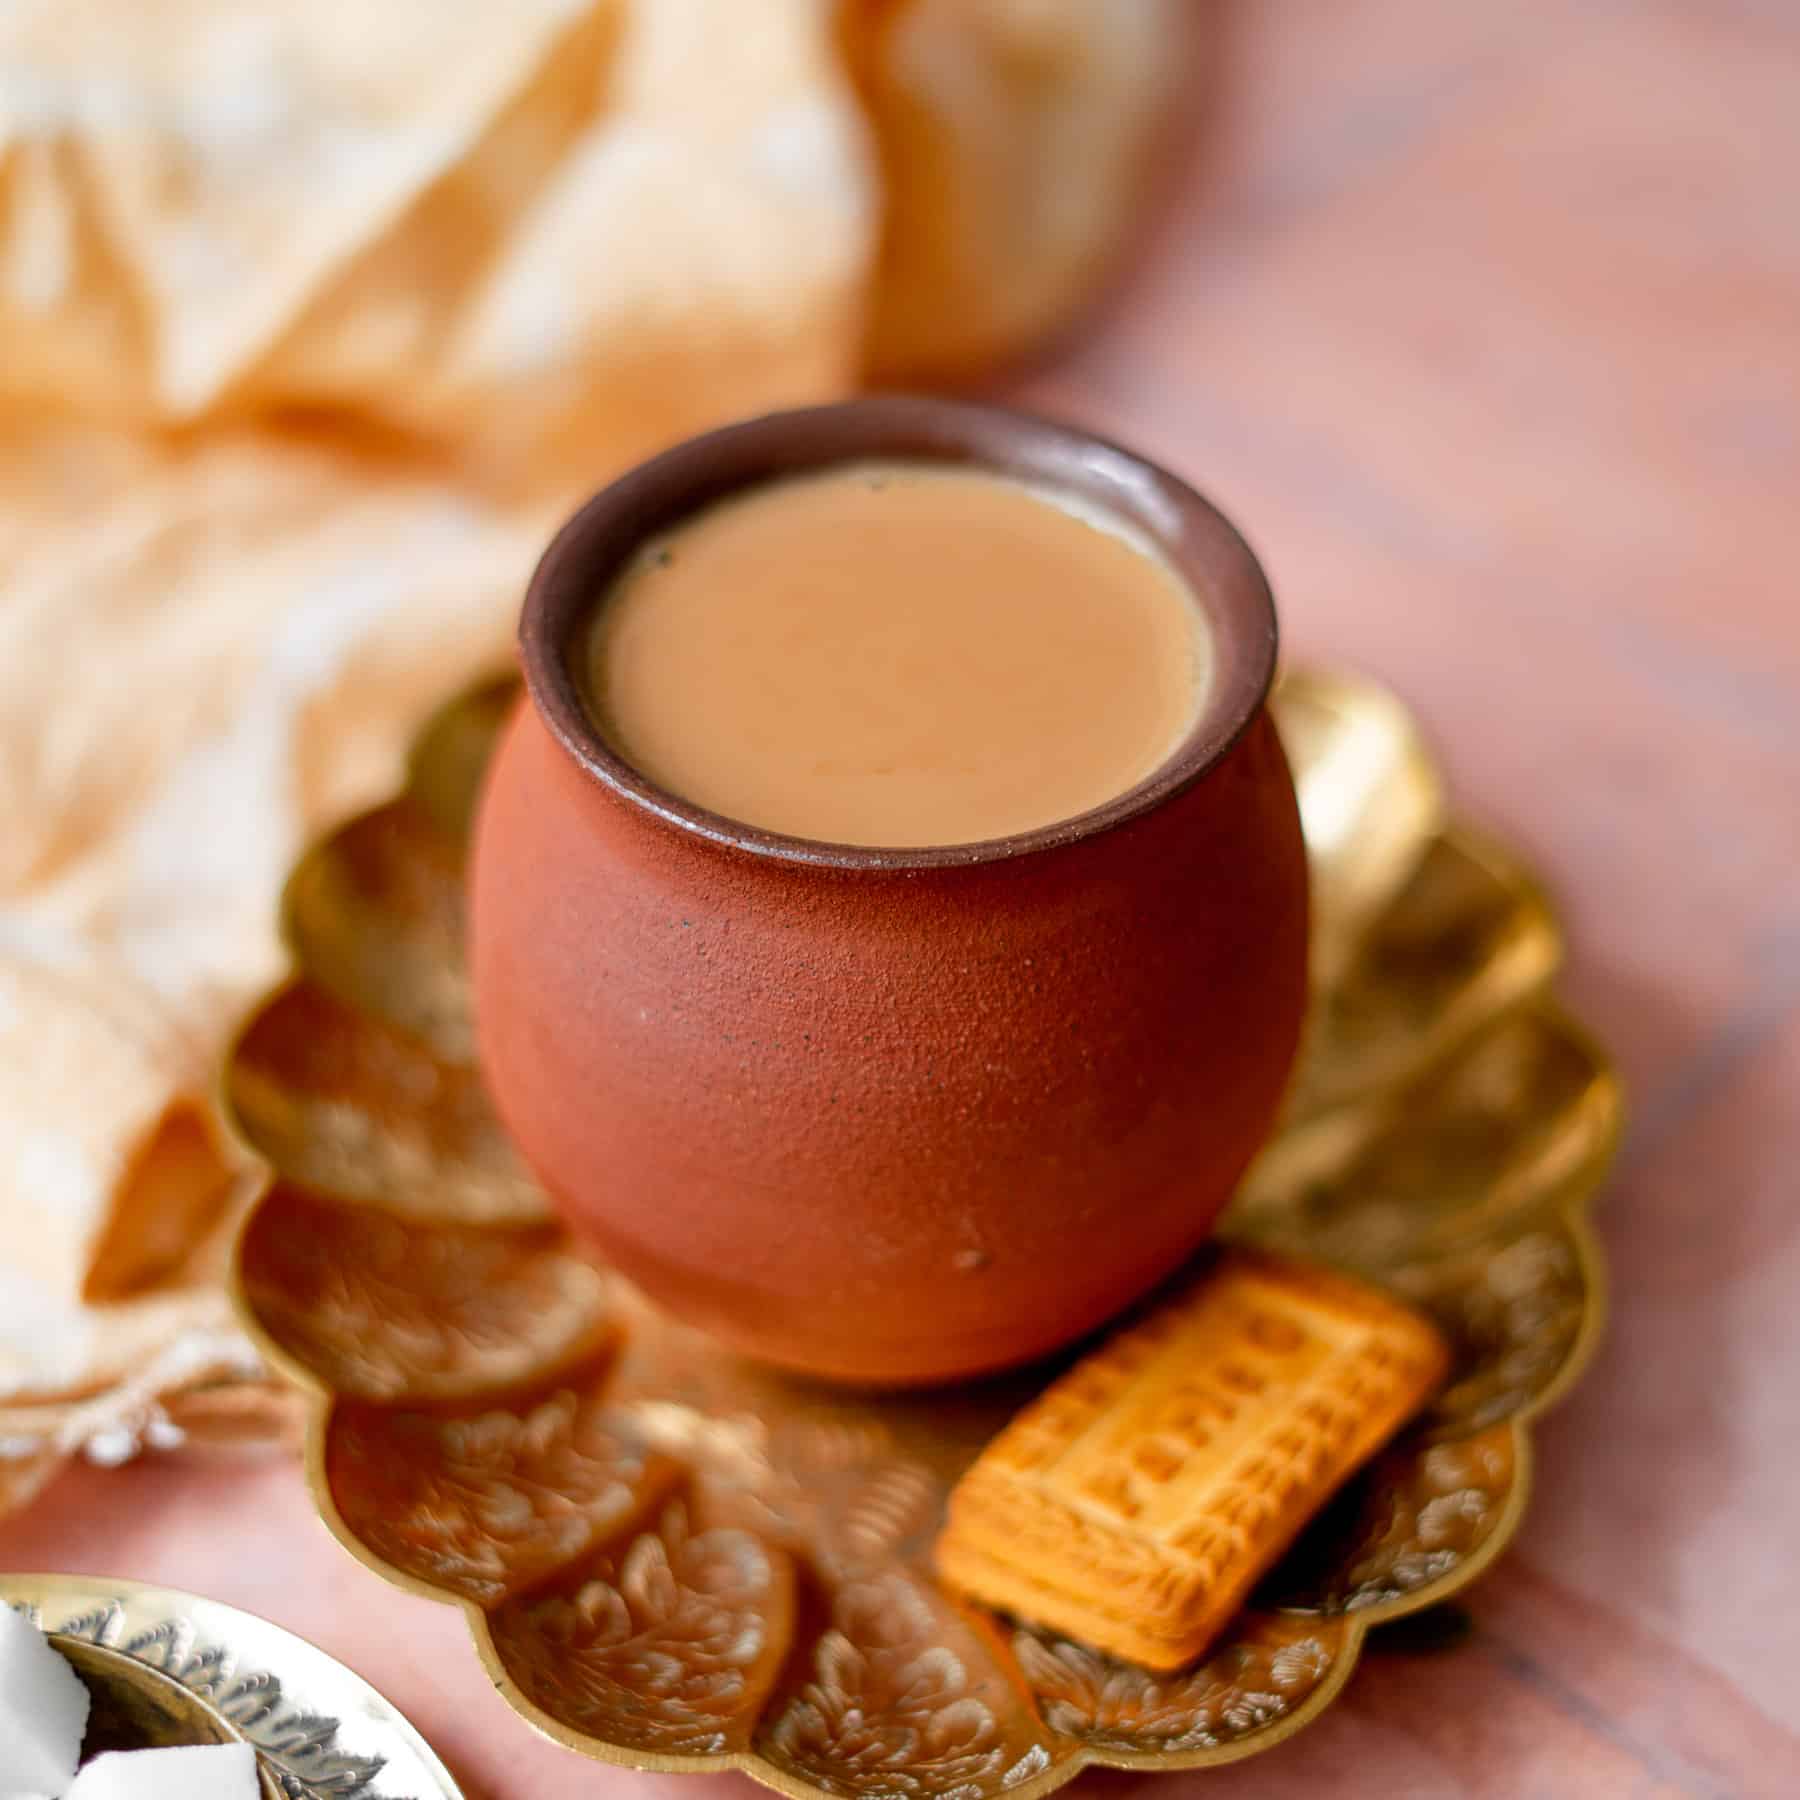 Buy Masala Chai Tea